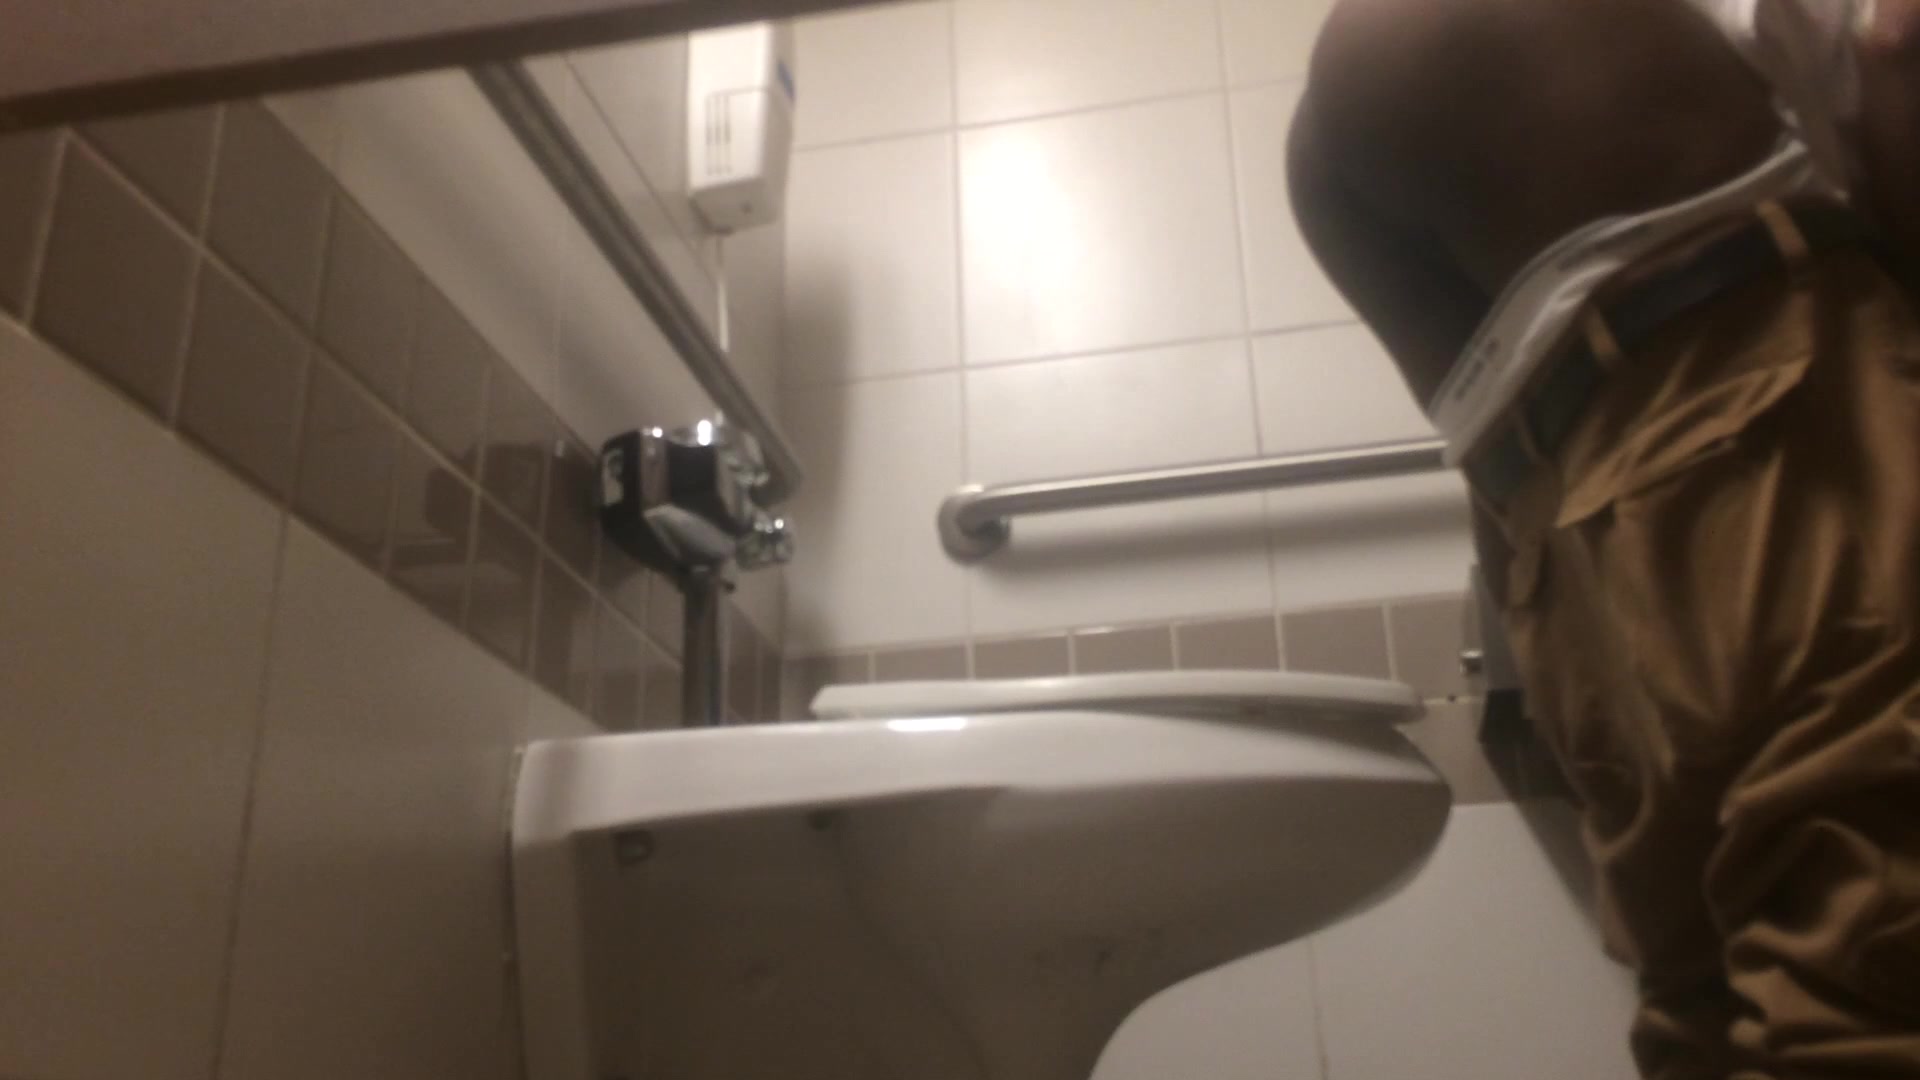 Spy cam in public toilet - video 3 pic